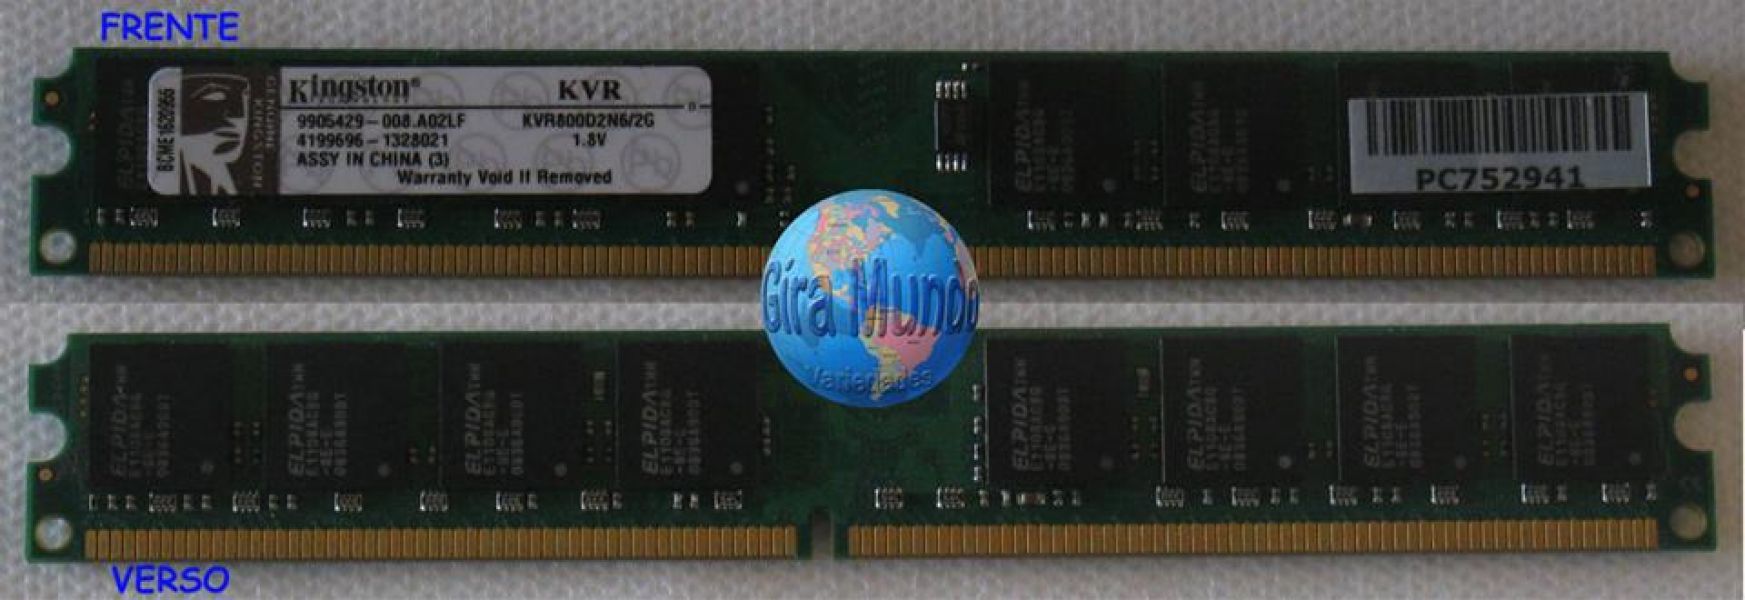 Memria Kingston DDR2 2GB 800mhz